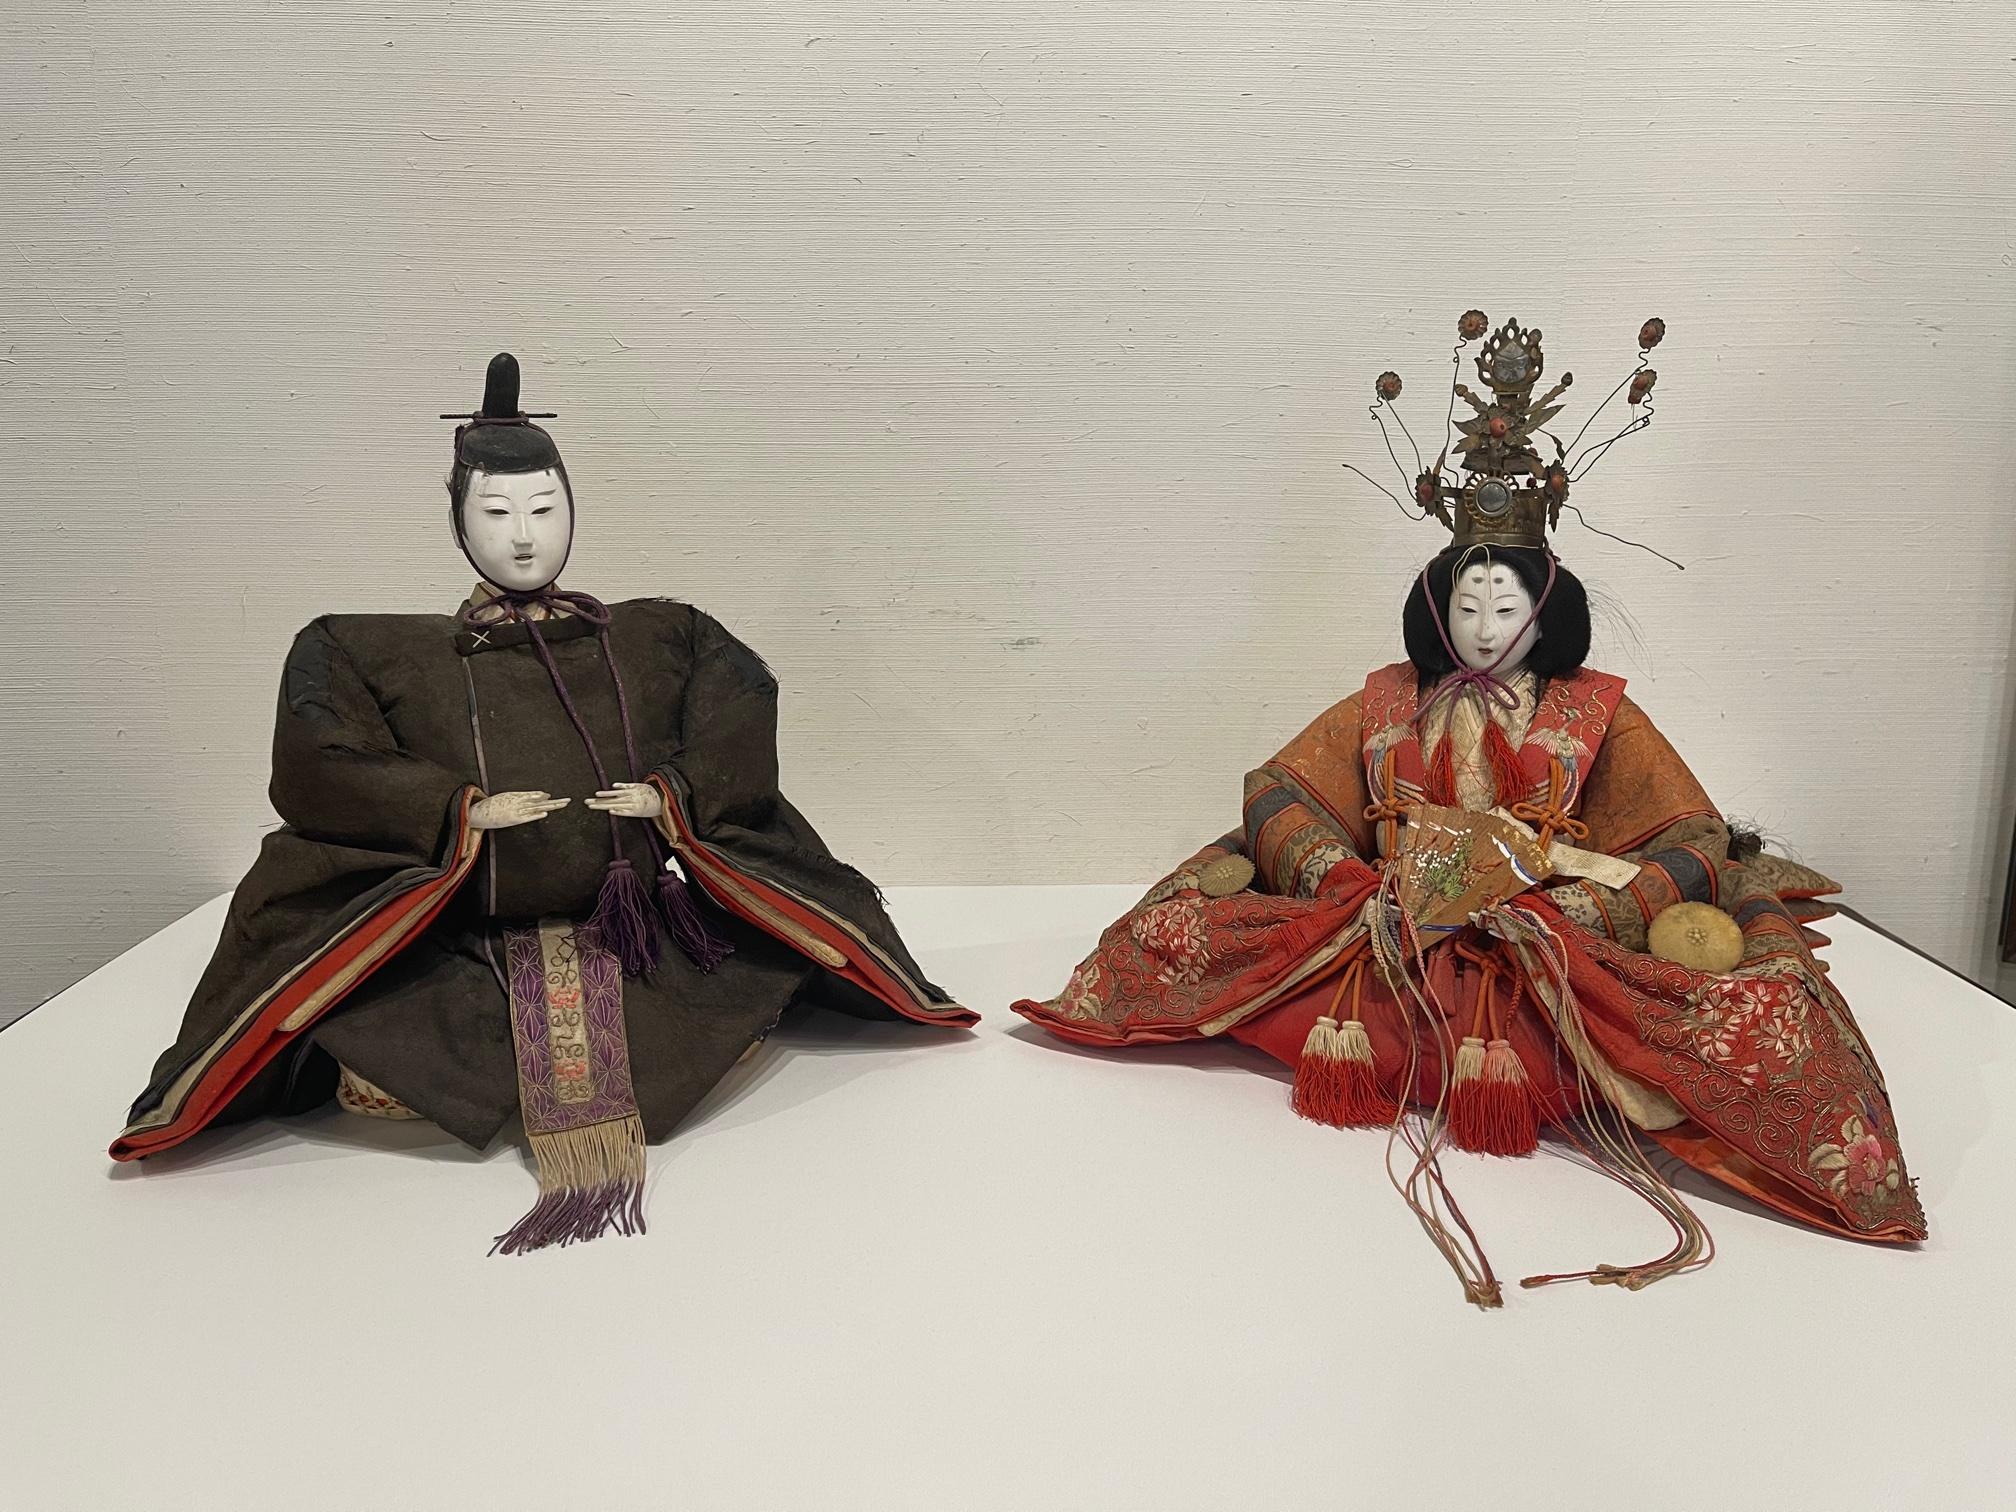 Antique Japanese Emperor and Empress figures, Meiji Period, late 19th century.
Measures: Emperor - 9